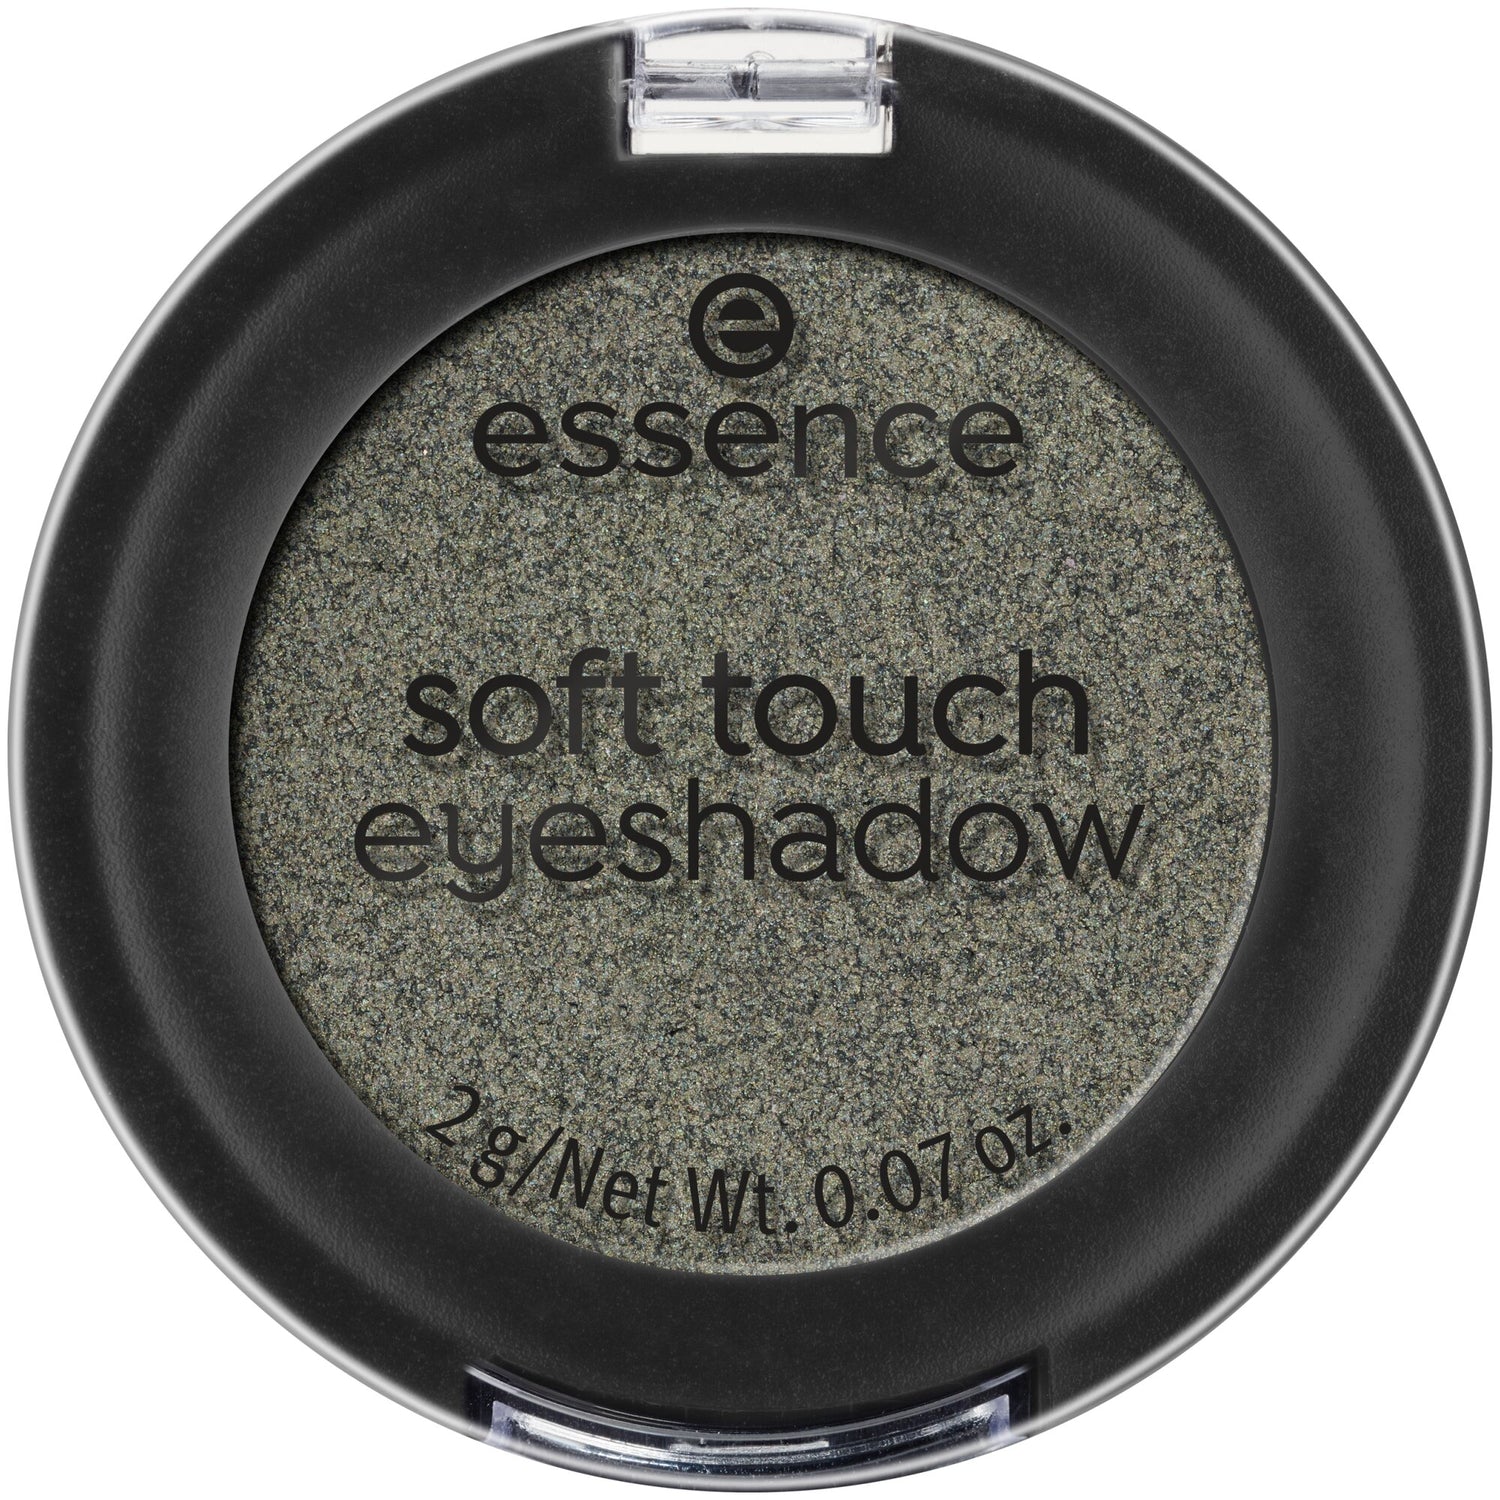 Essence Soft Touch Eyeshadow 2g Secret Woods Closed